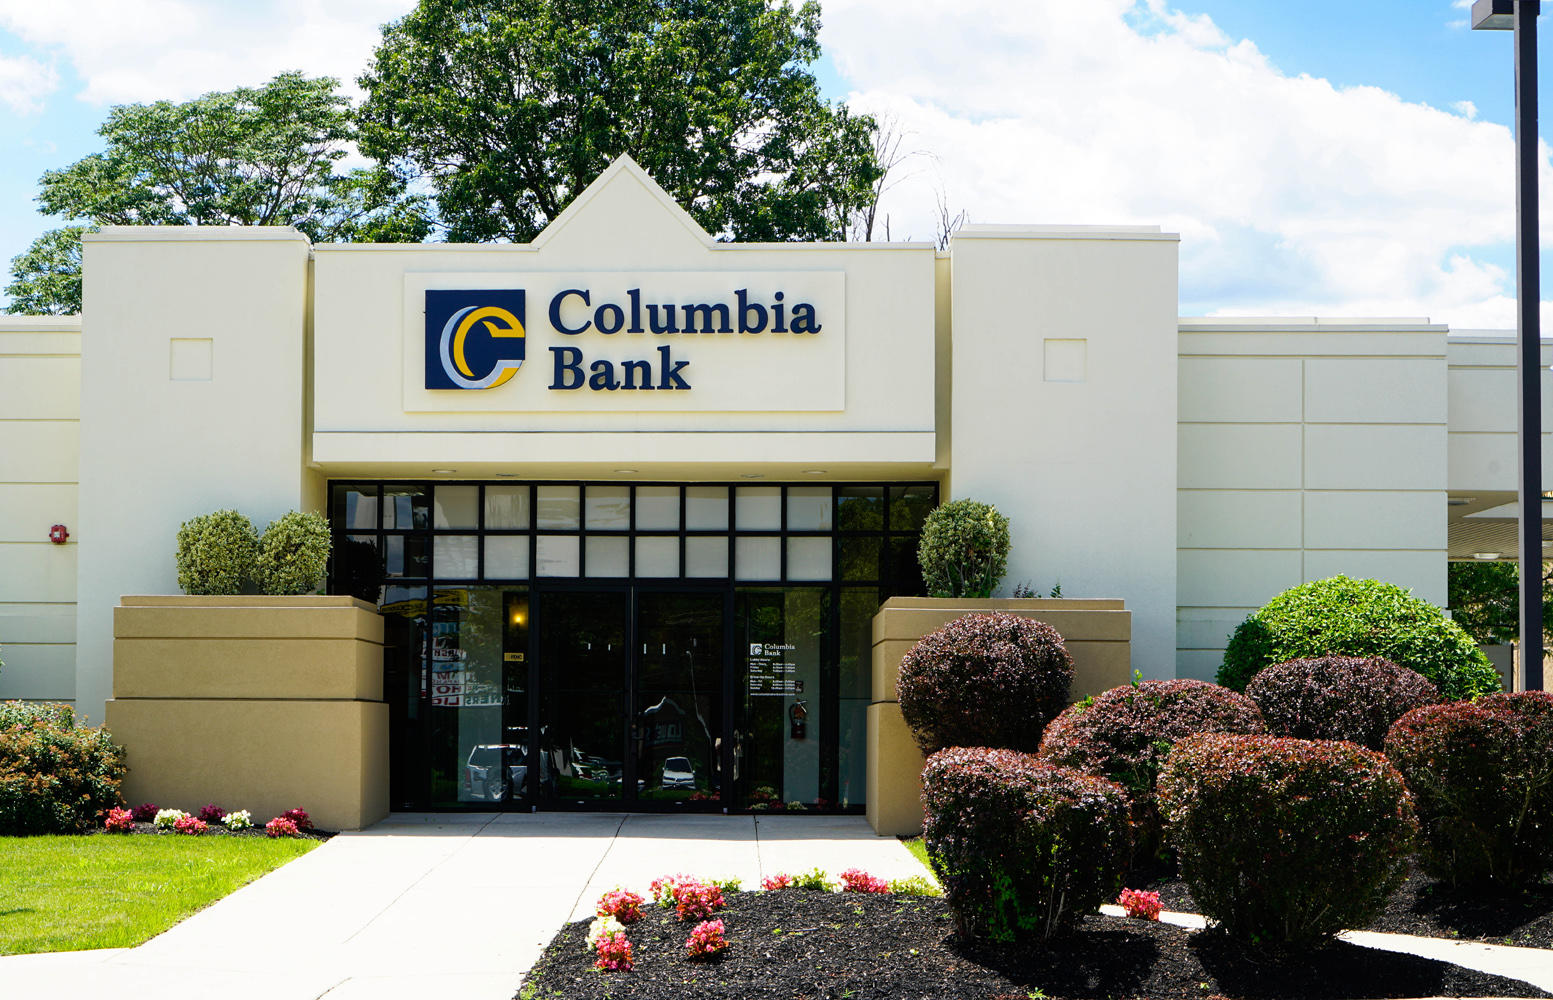 Columbia Bank Deptford (856)848-5055